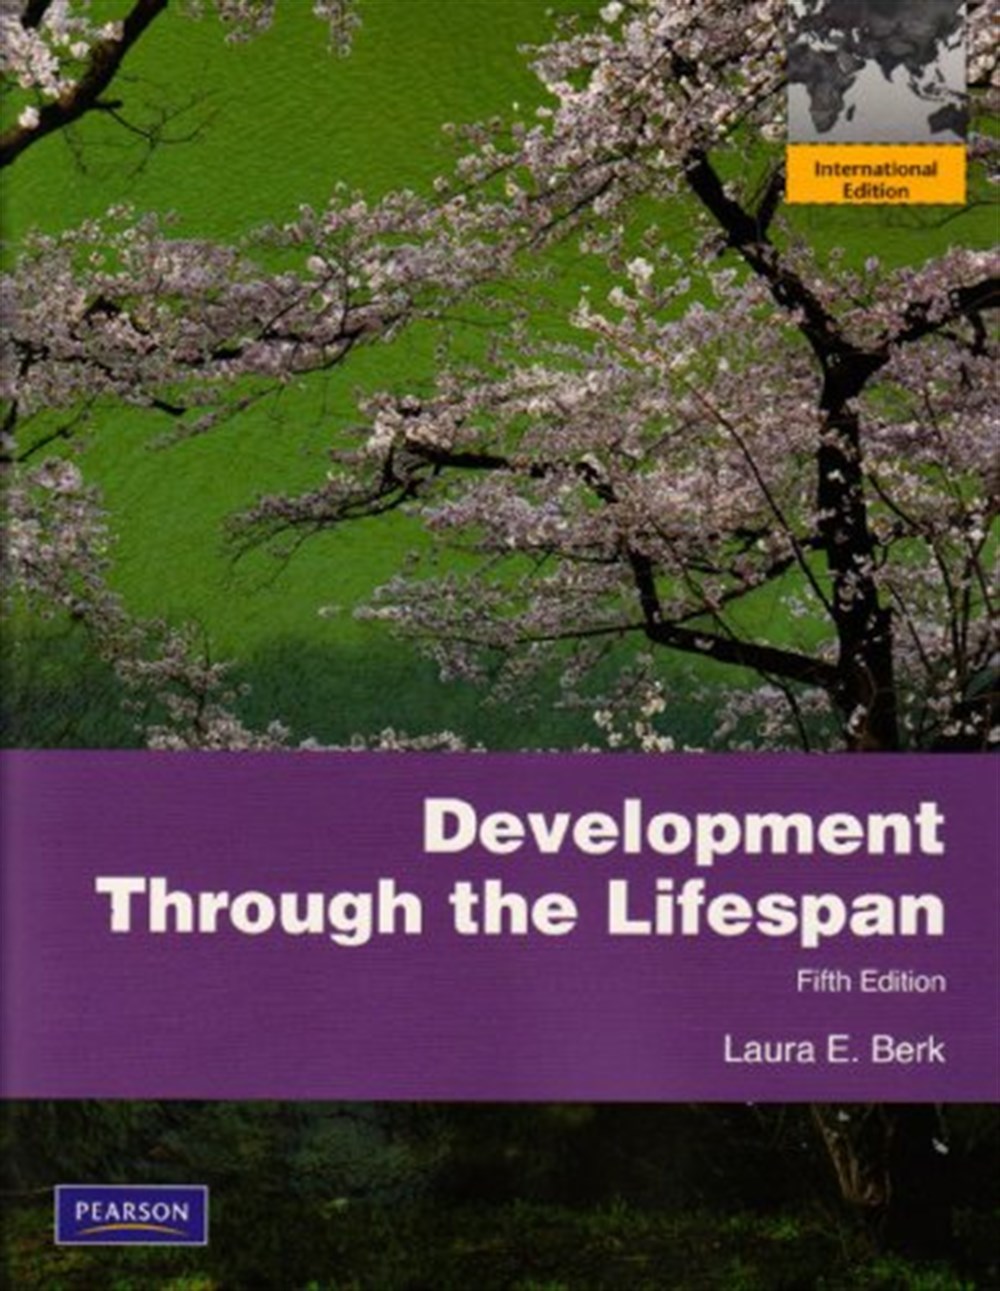 Development Through the Lifespan, 5th Ed. (International Edition)